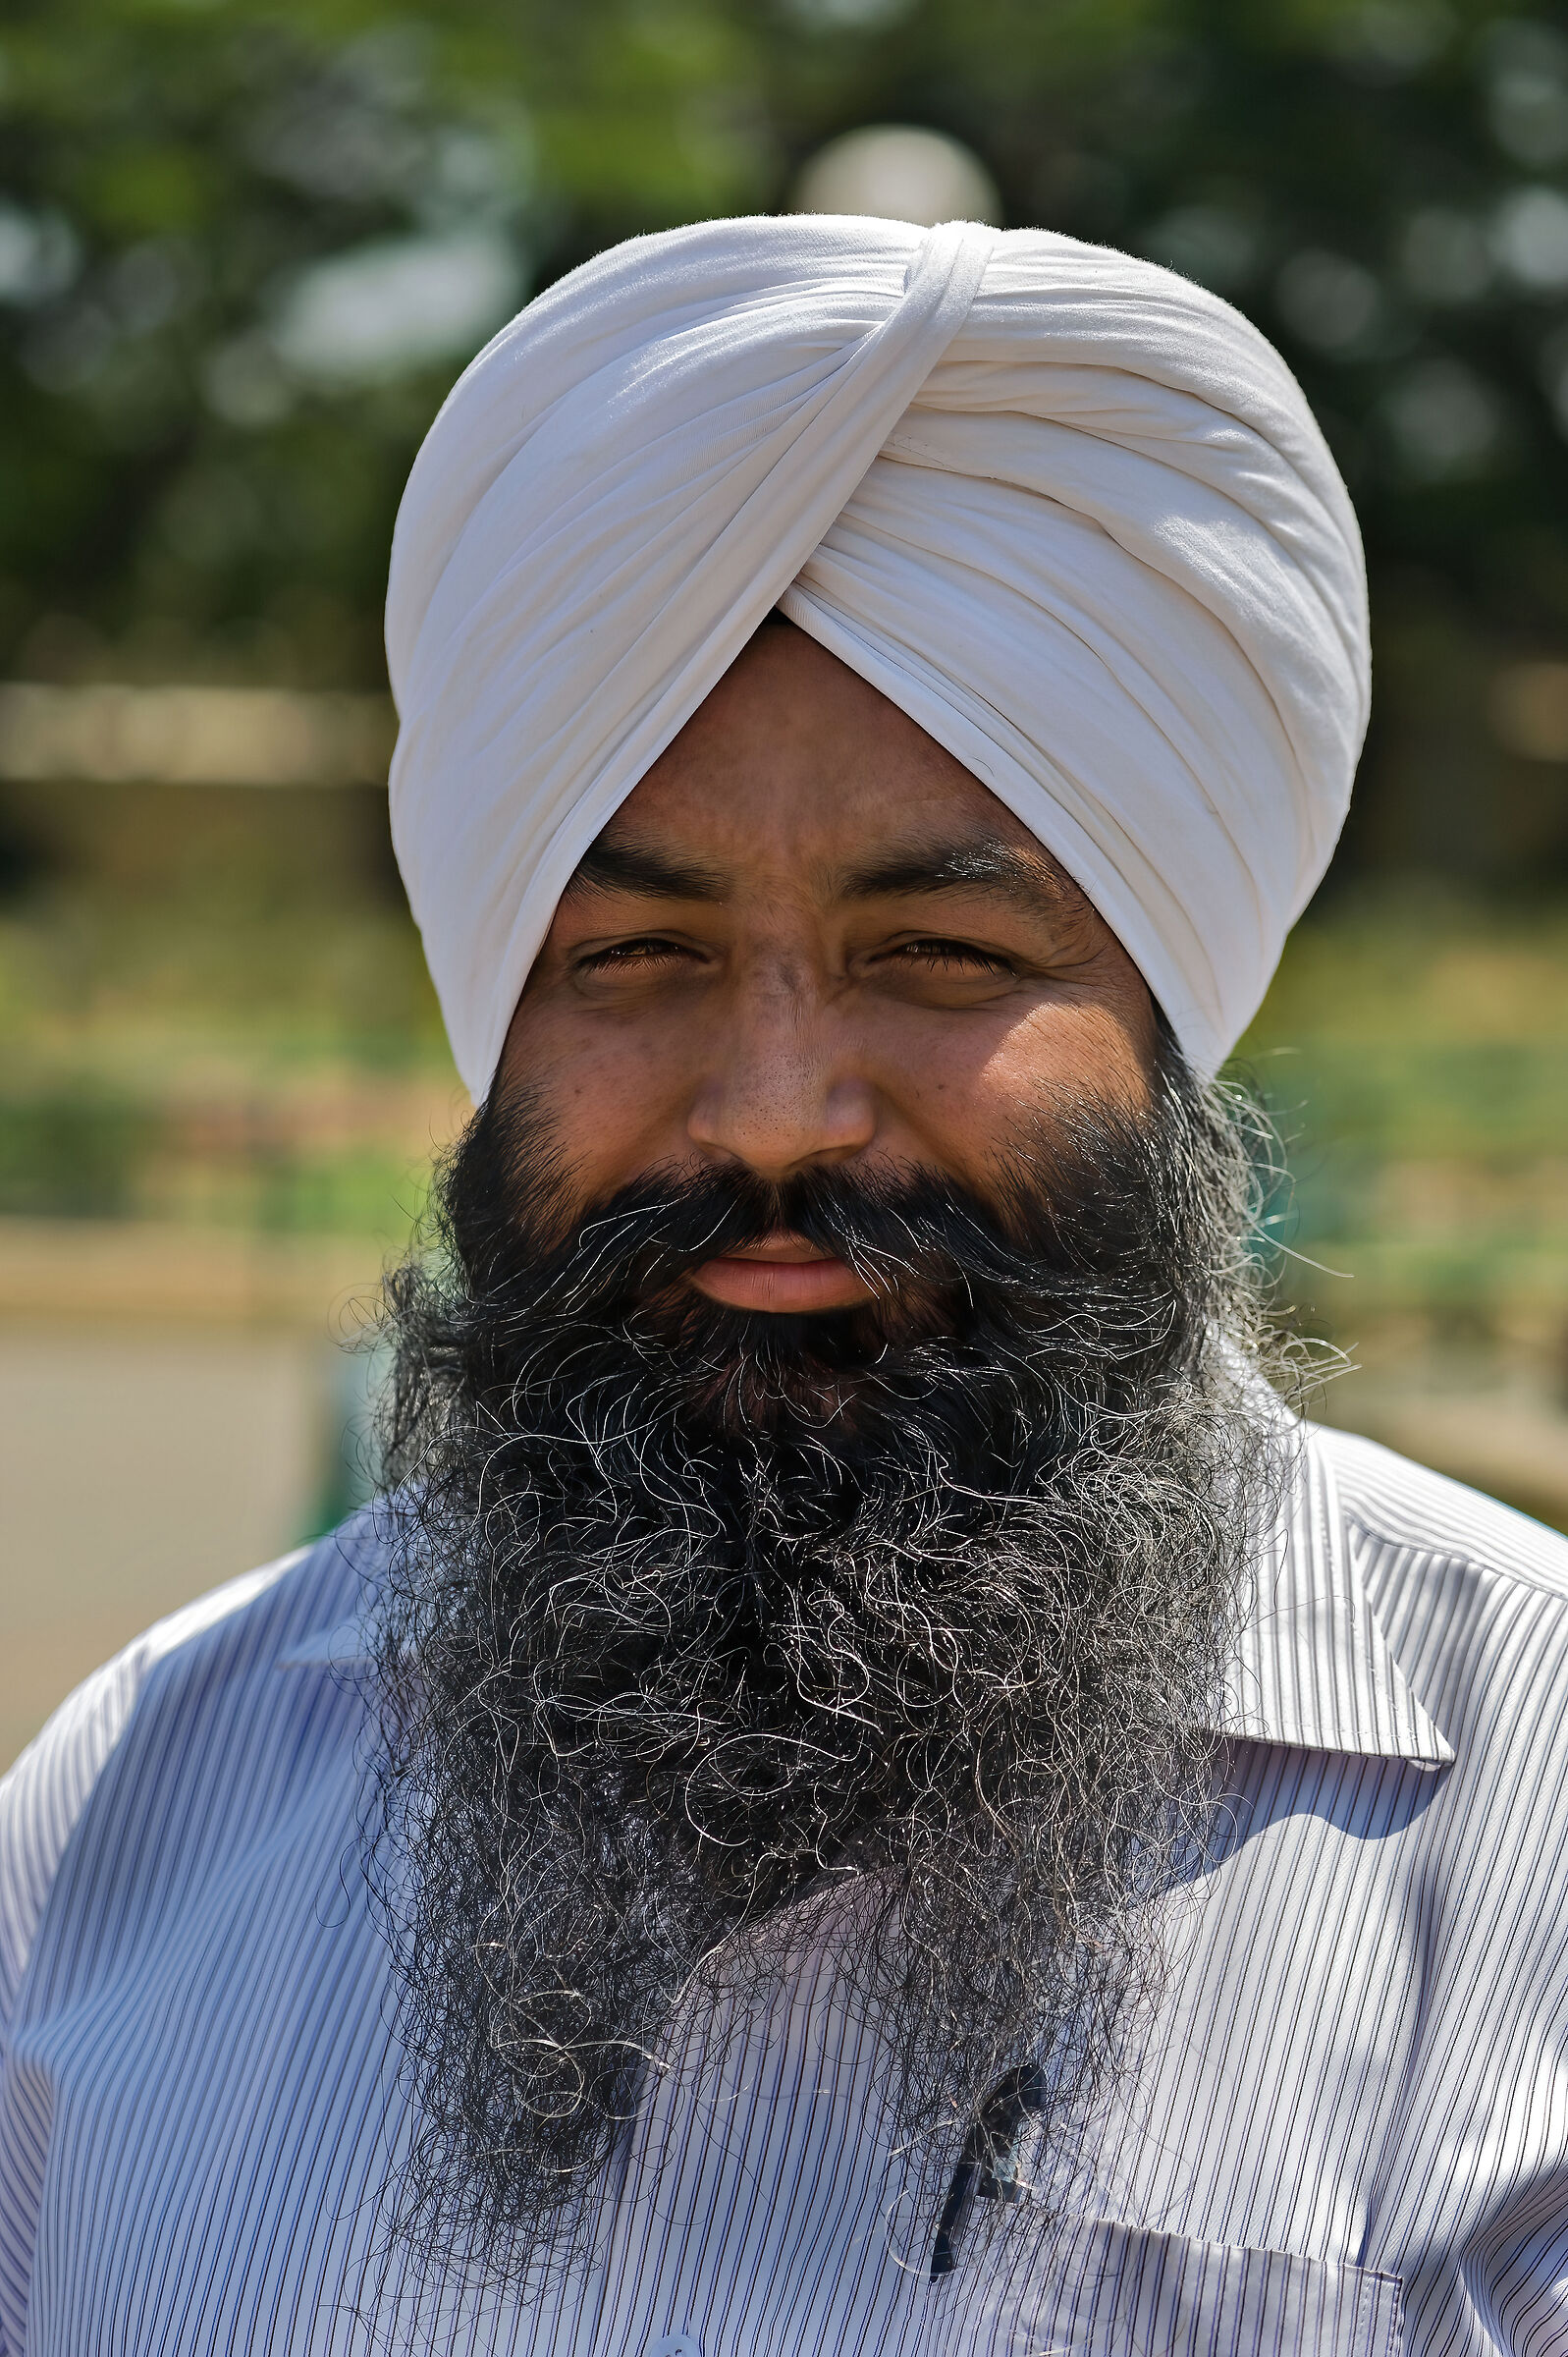 Uomo di etnia Sikh...